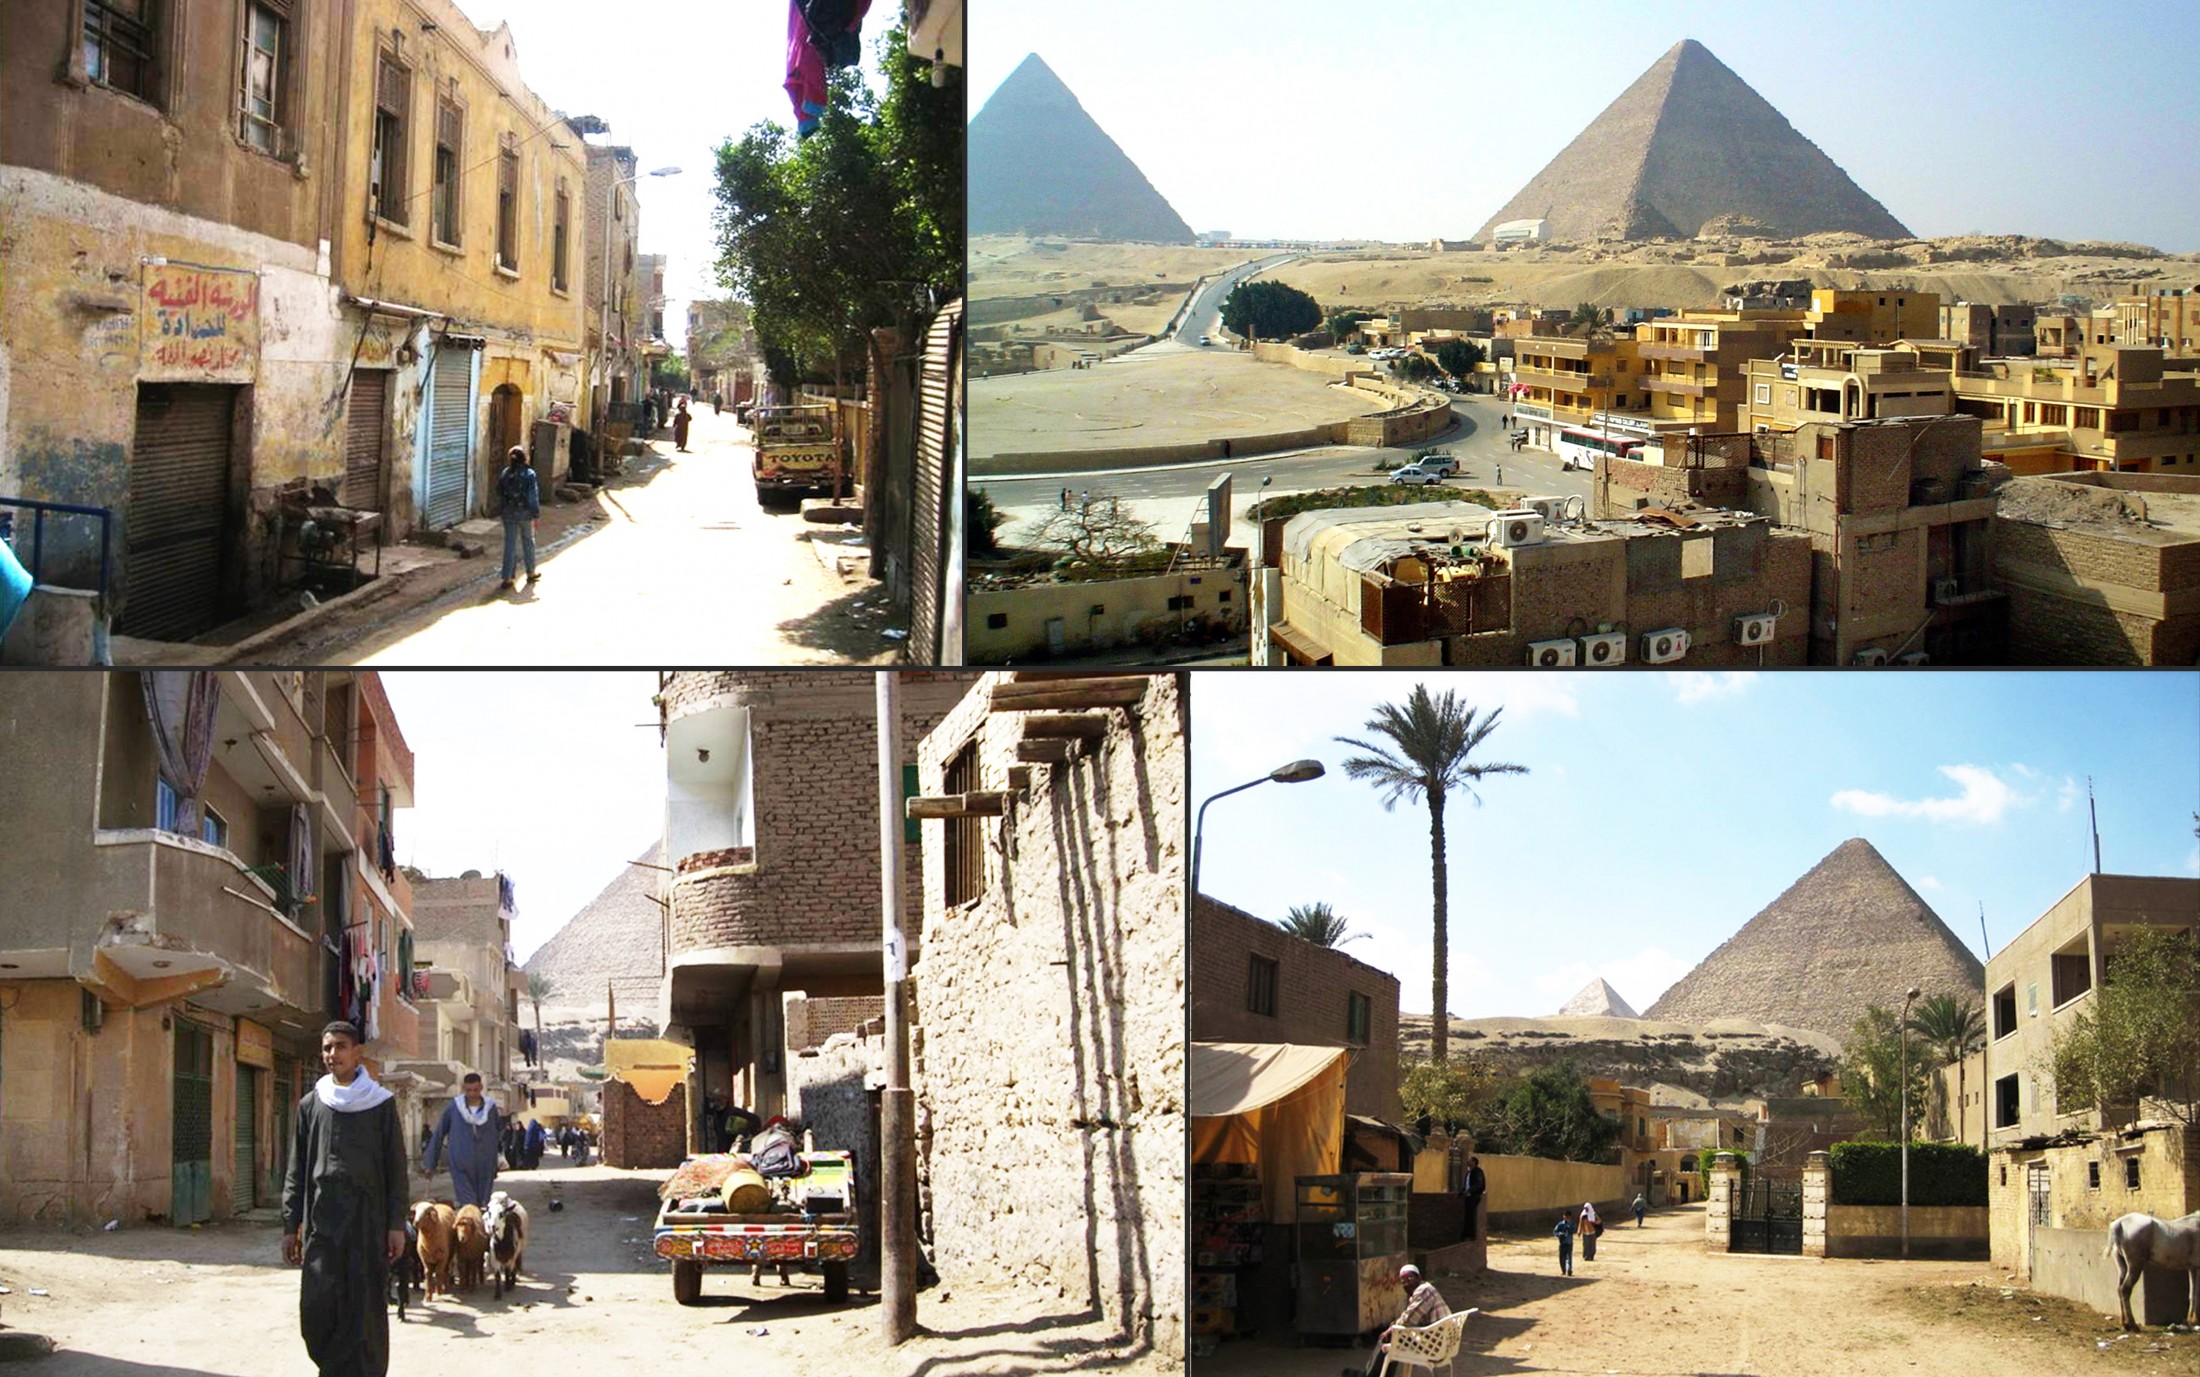 Photo credits: GOPP (2009), “Cairo Future Vision 2050” Presentation.